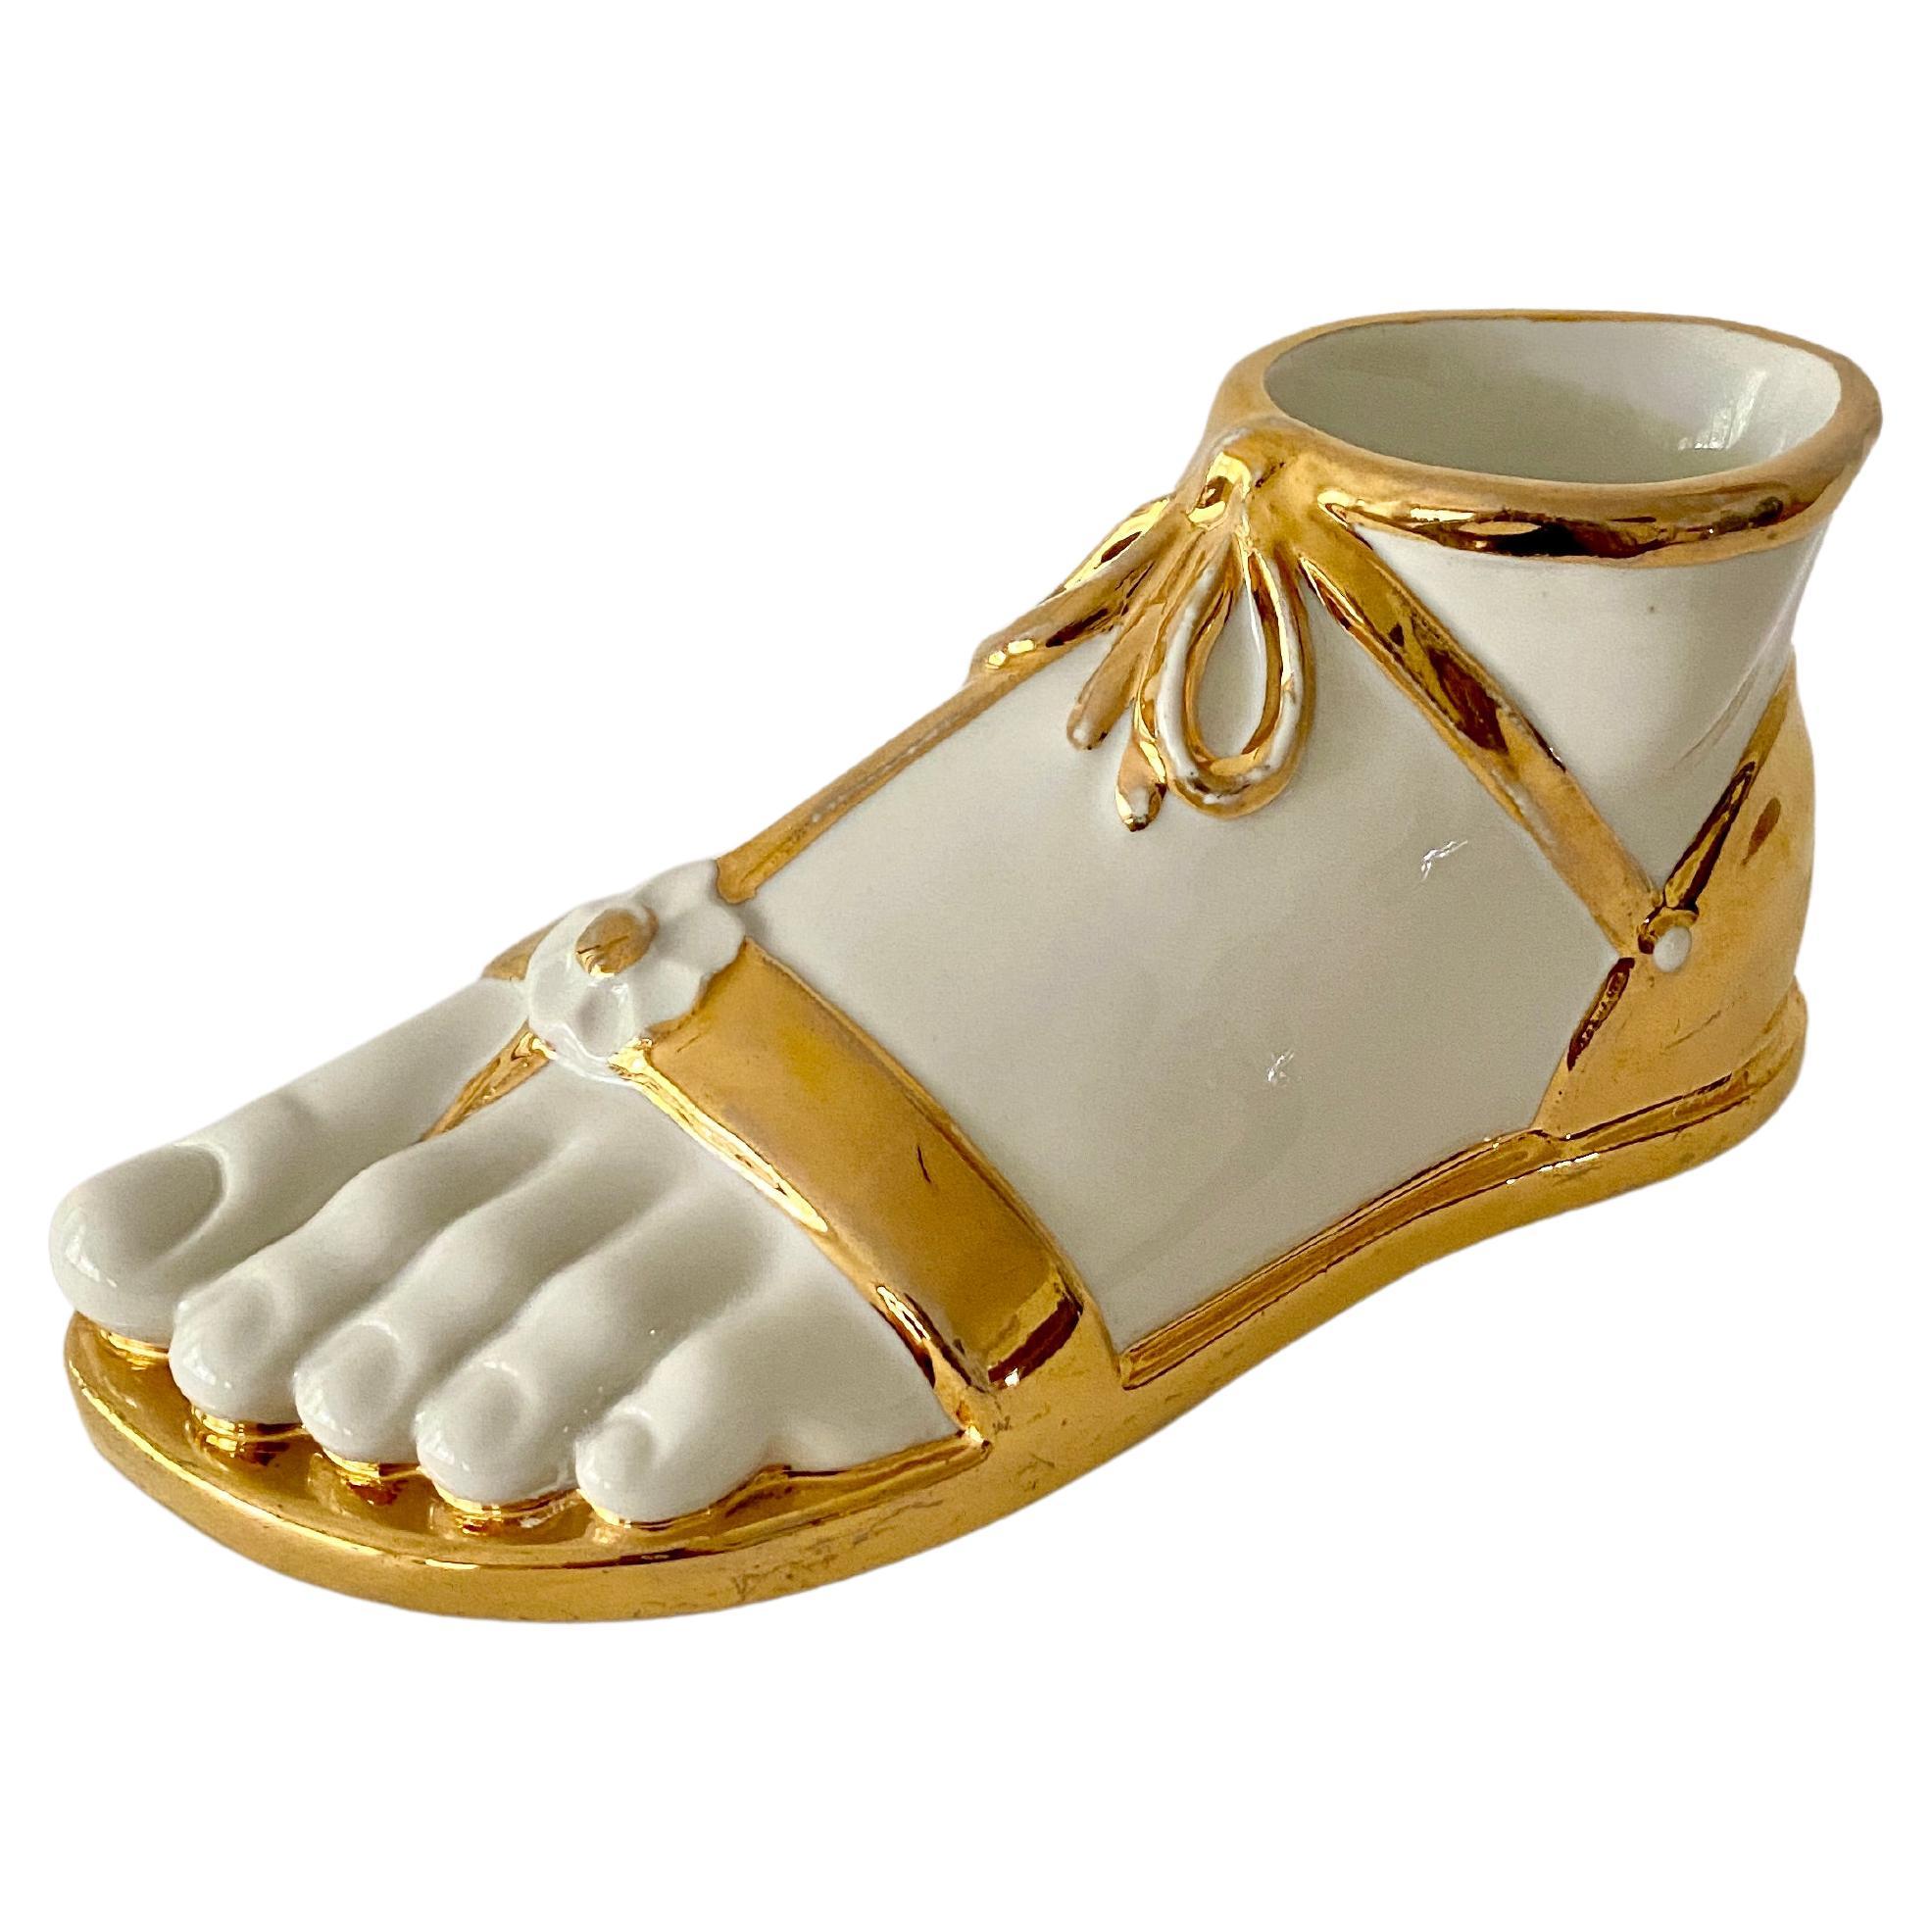 White and Gold "Piede Romano" Roman Left Foot by Piero Fornasetti